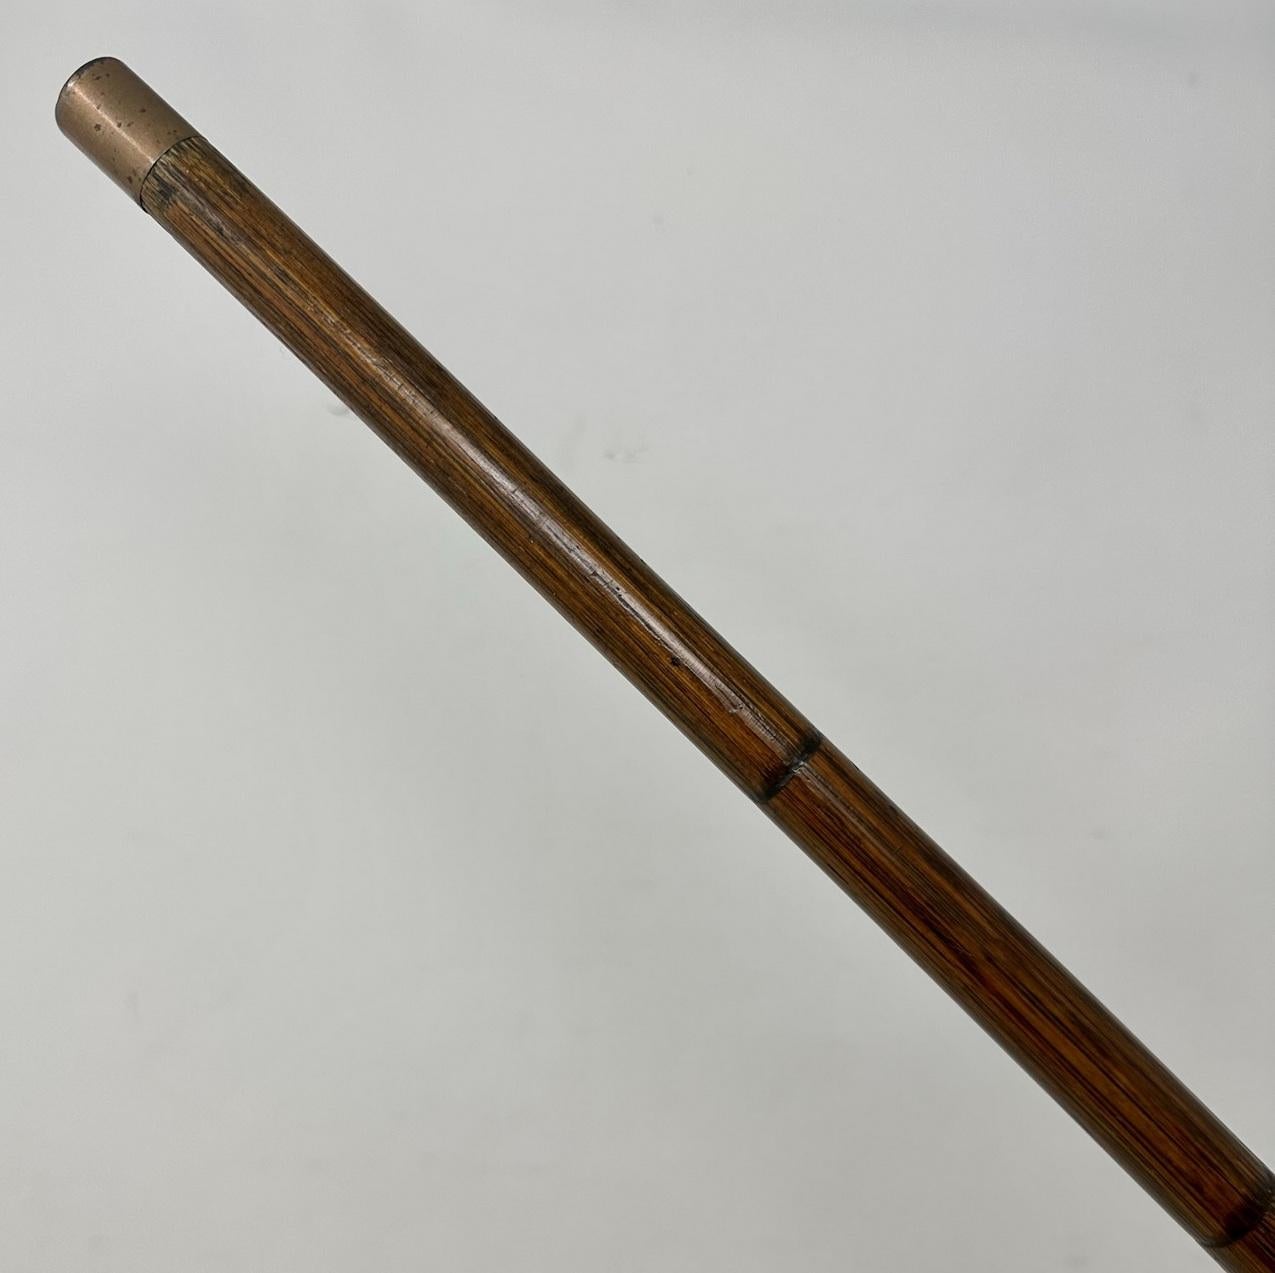 Carved Antique Vintage Lady's Gentleman's Walking Stick Sterling Silver Crook Handle For Sale